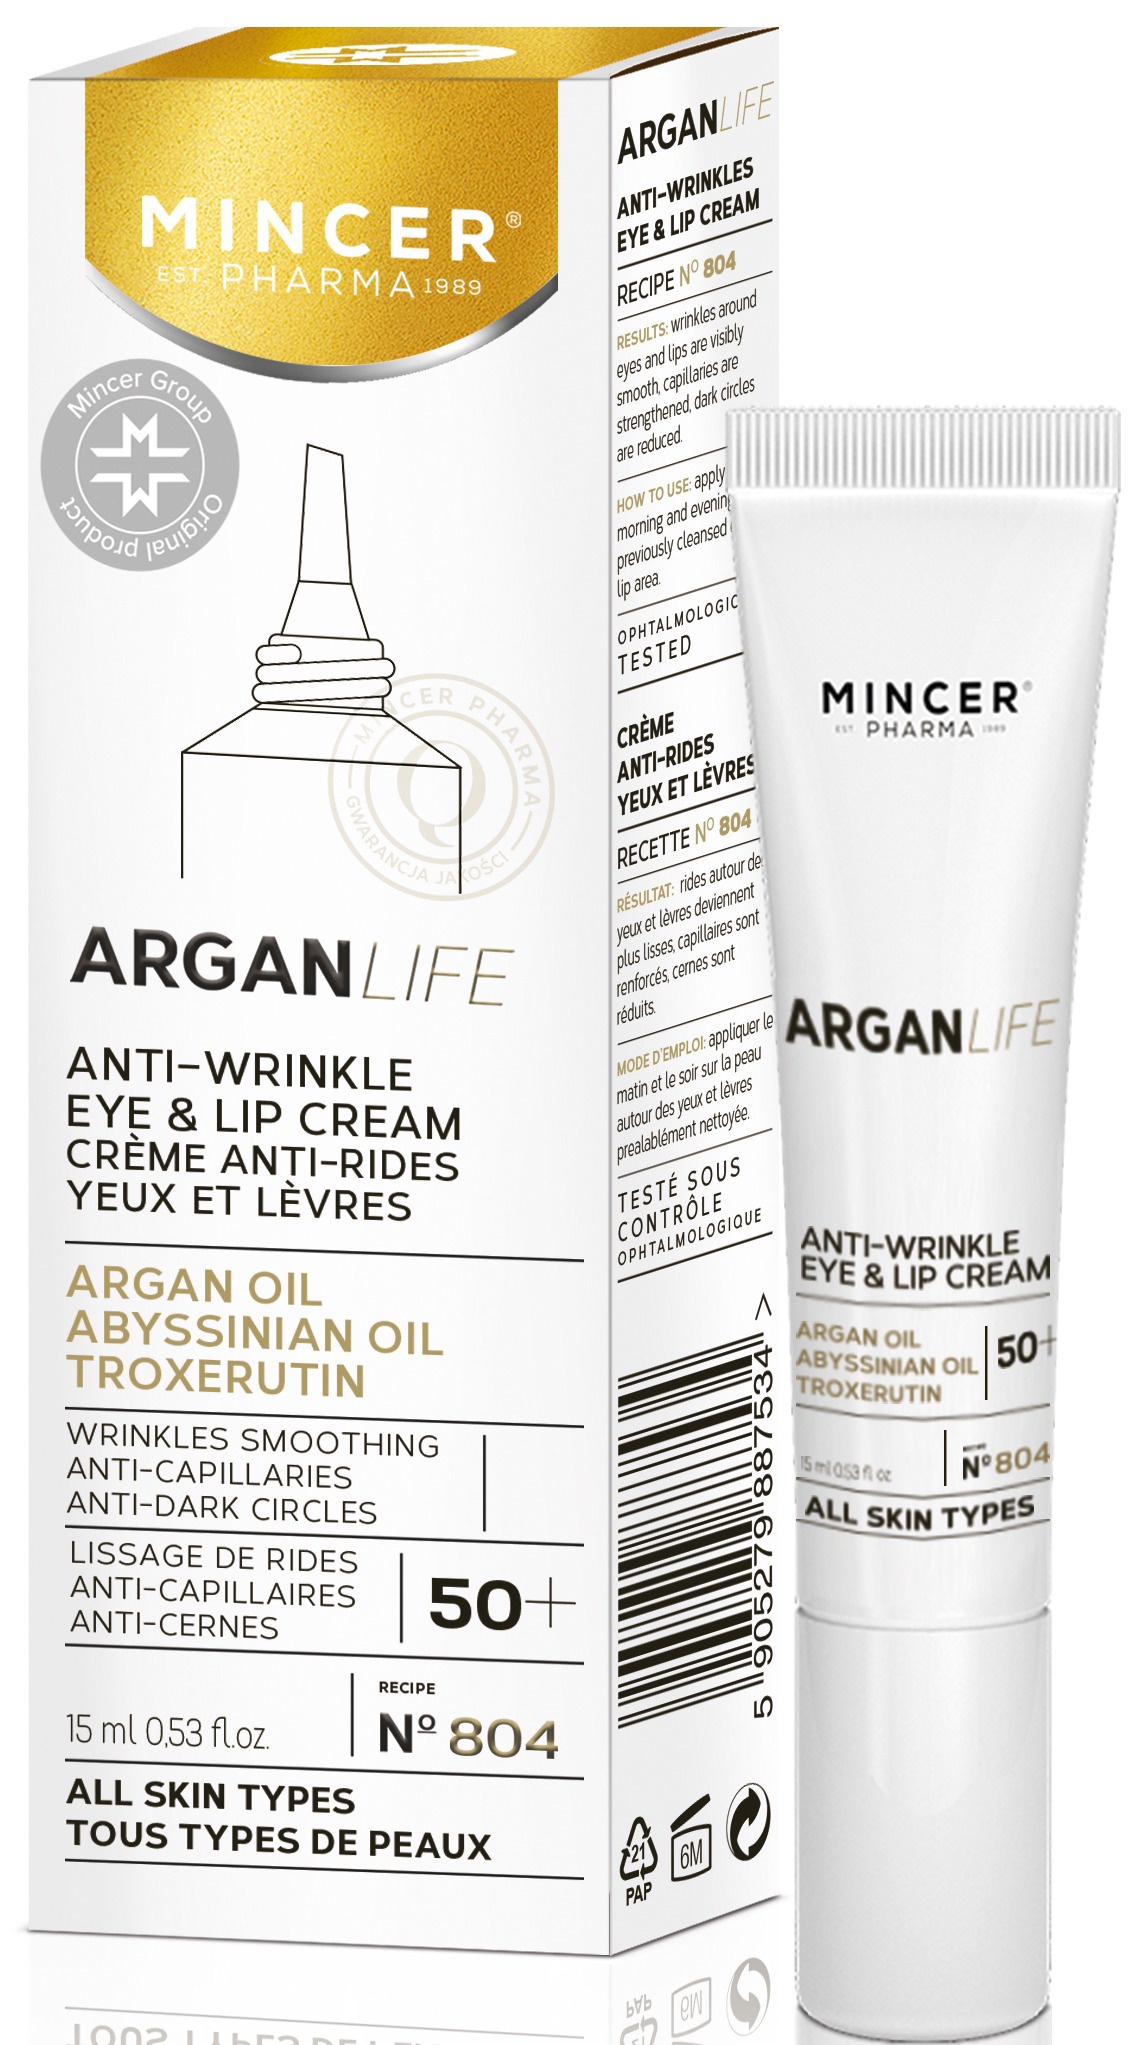 MINCER Pharma Argan Life Anti-Wrinkle Eye Cream